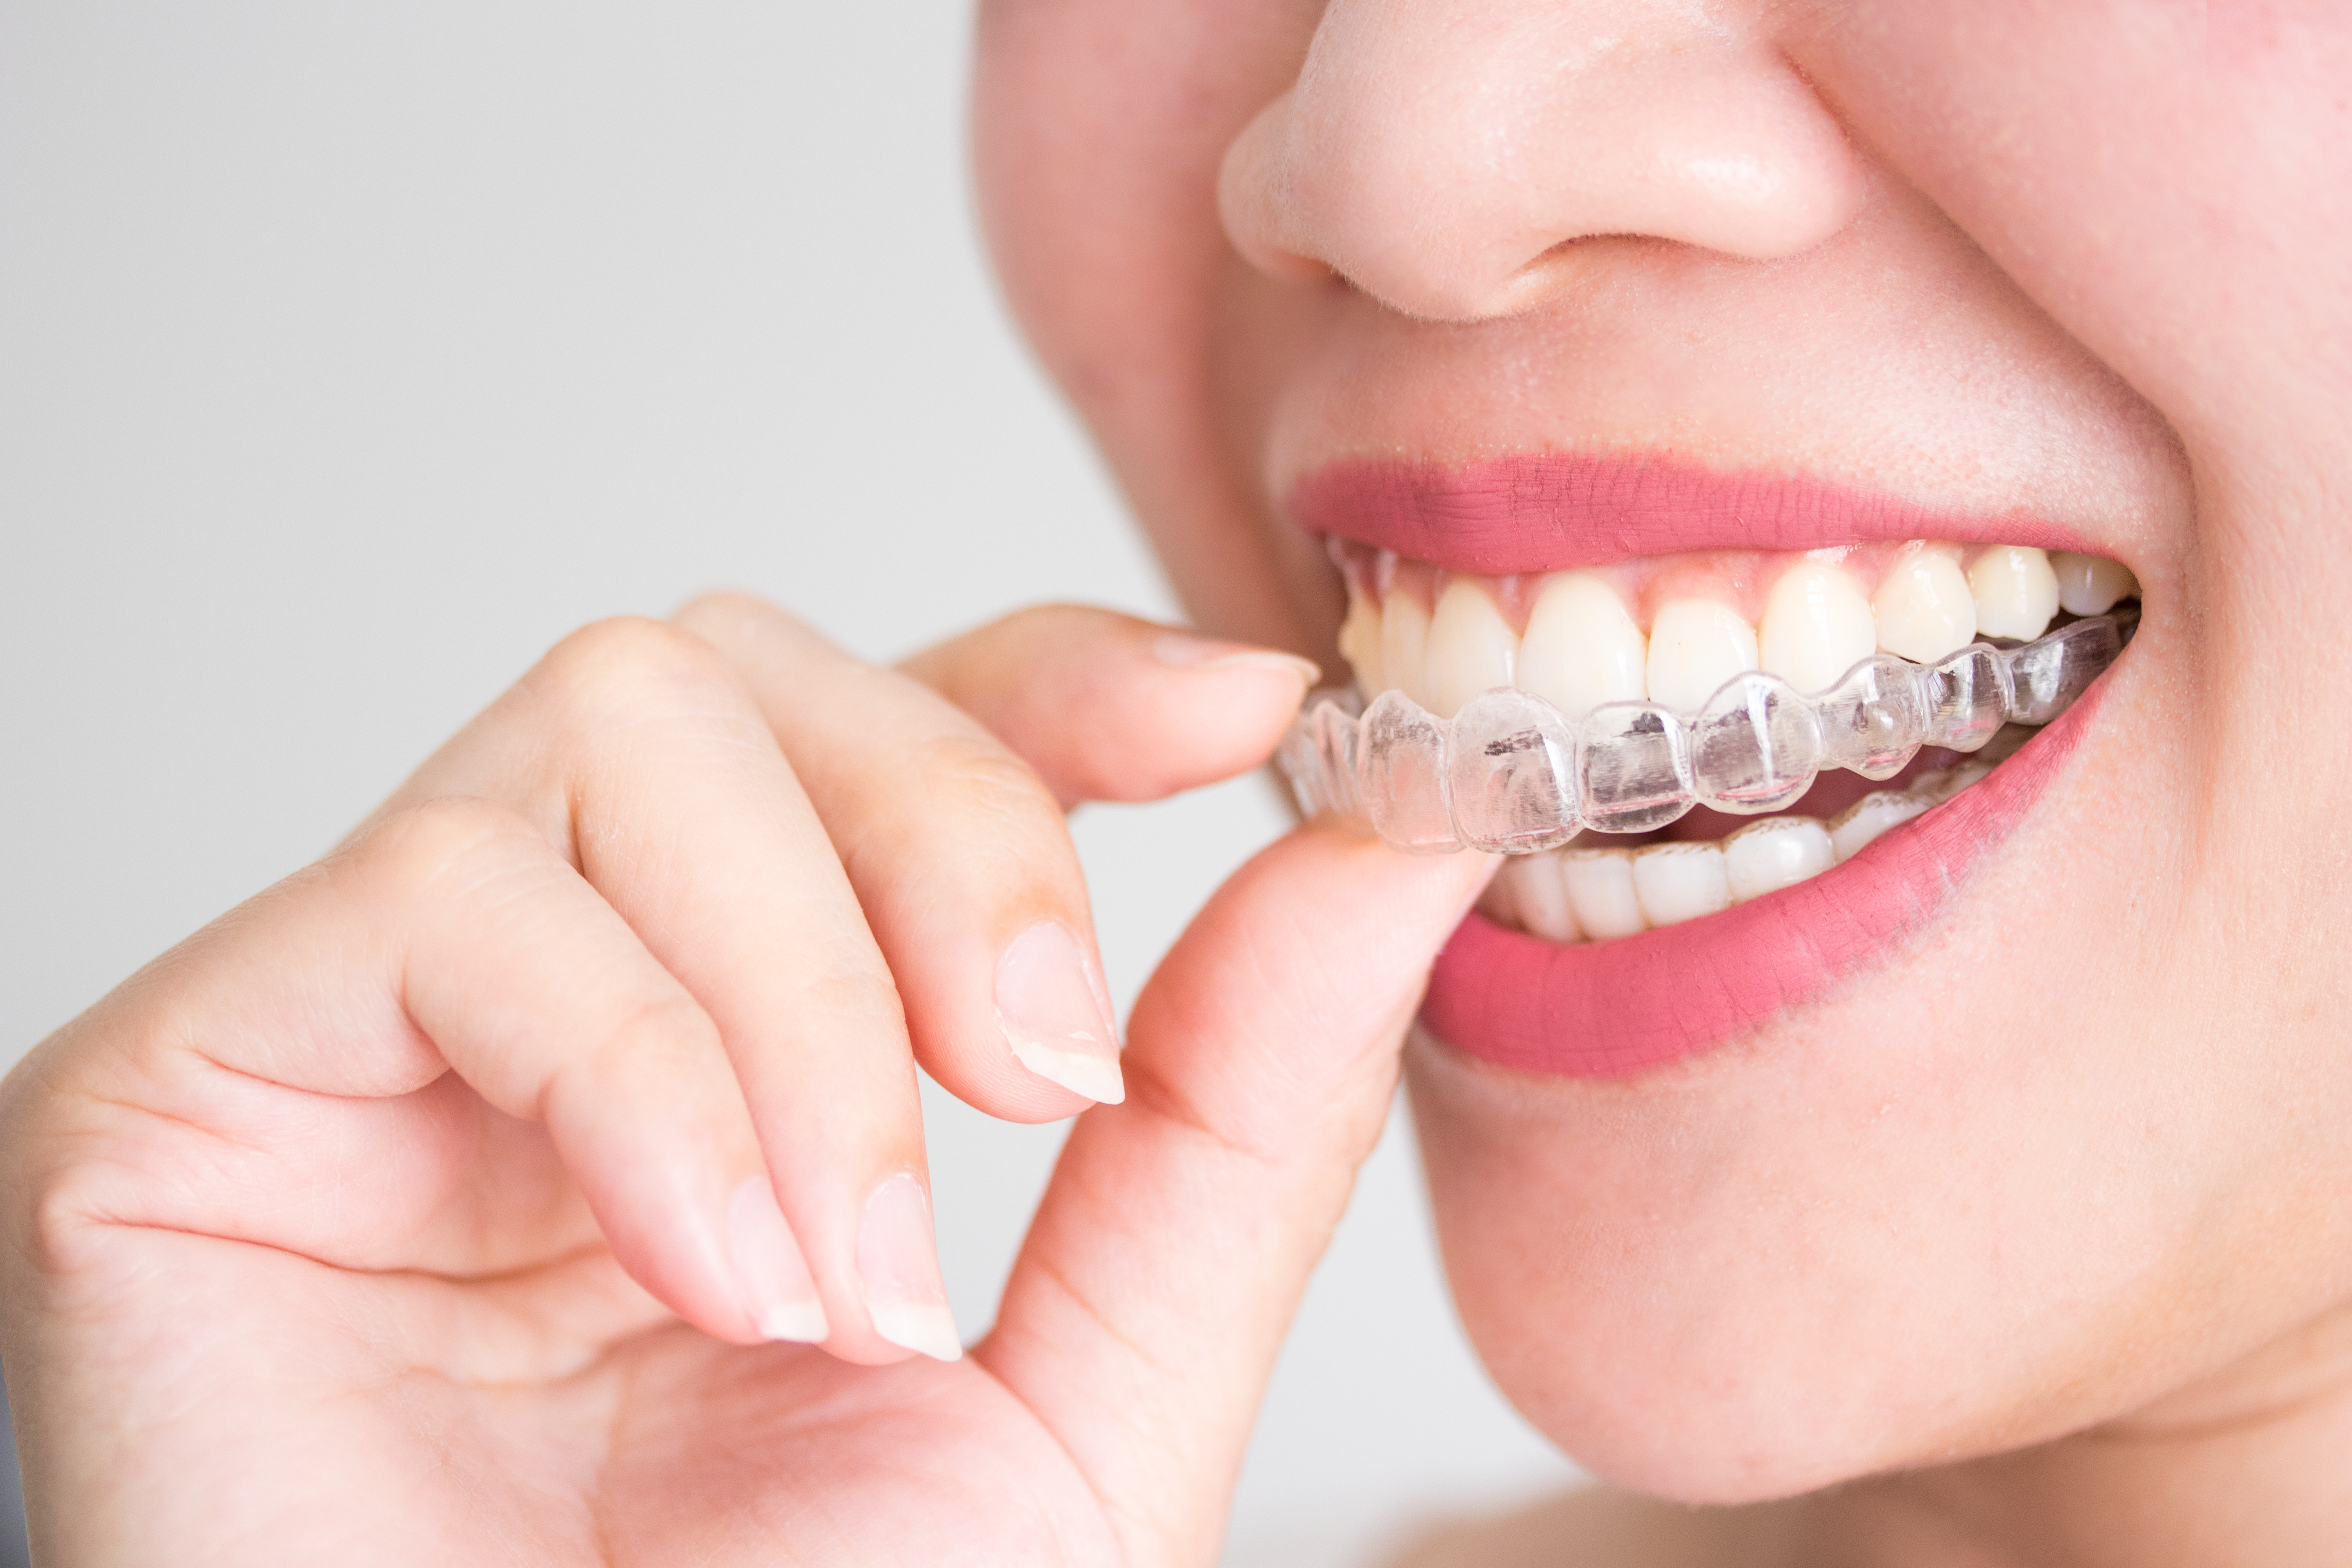 Invisalign : Orthodontie et appareil dentaire invisible - GUIDE - Dentego